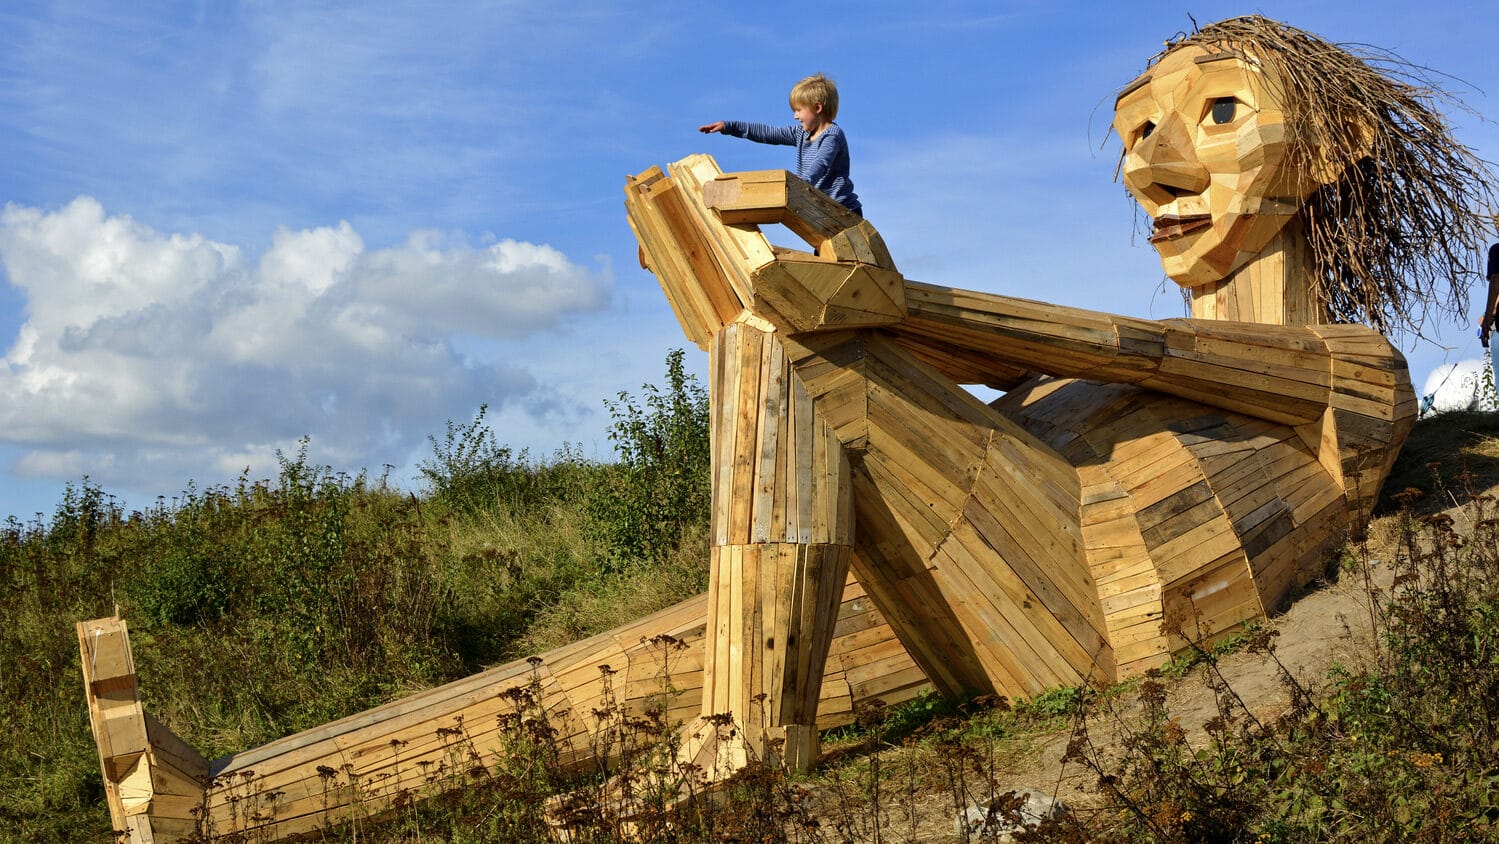 Image: A huge sculpture of a troll, 50 feet long, made of scrap wood.